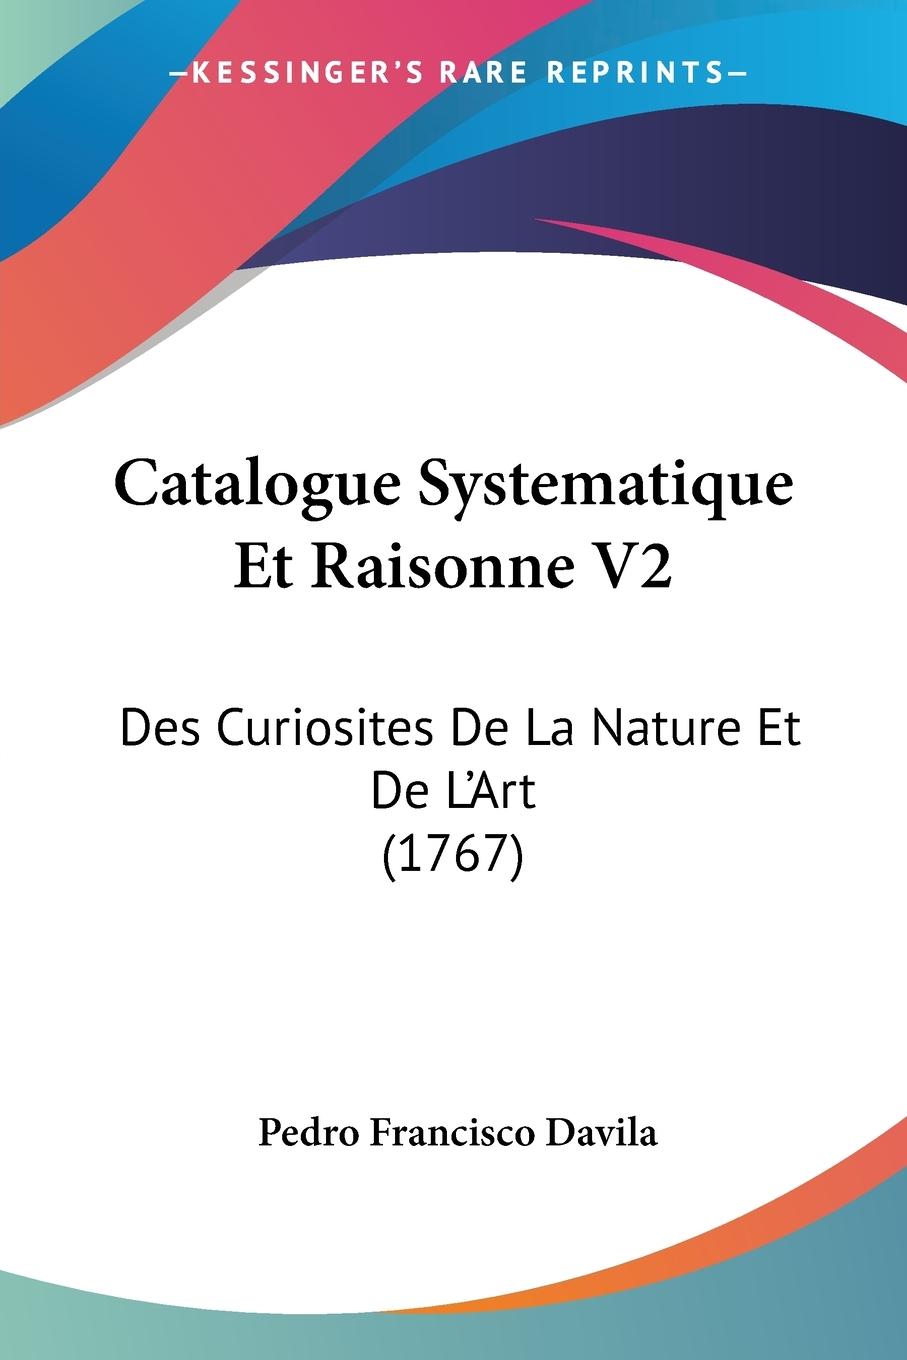 Catalogue Systematique Et Raisonne V2 - Davila, Pedro Francisco